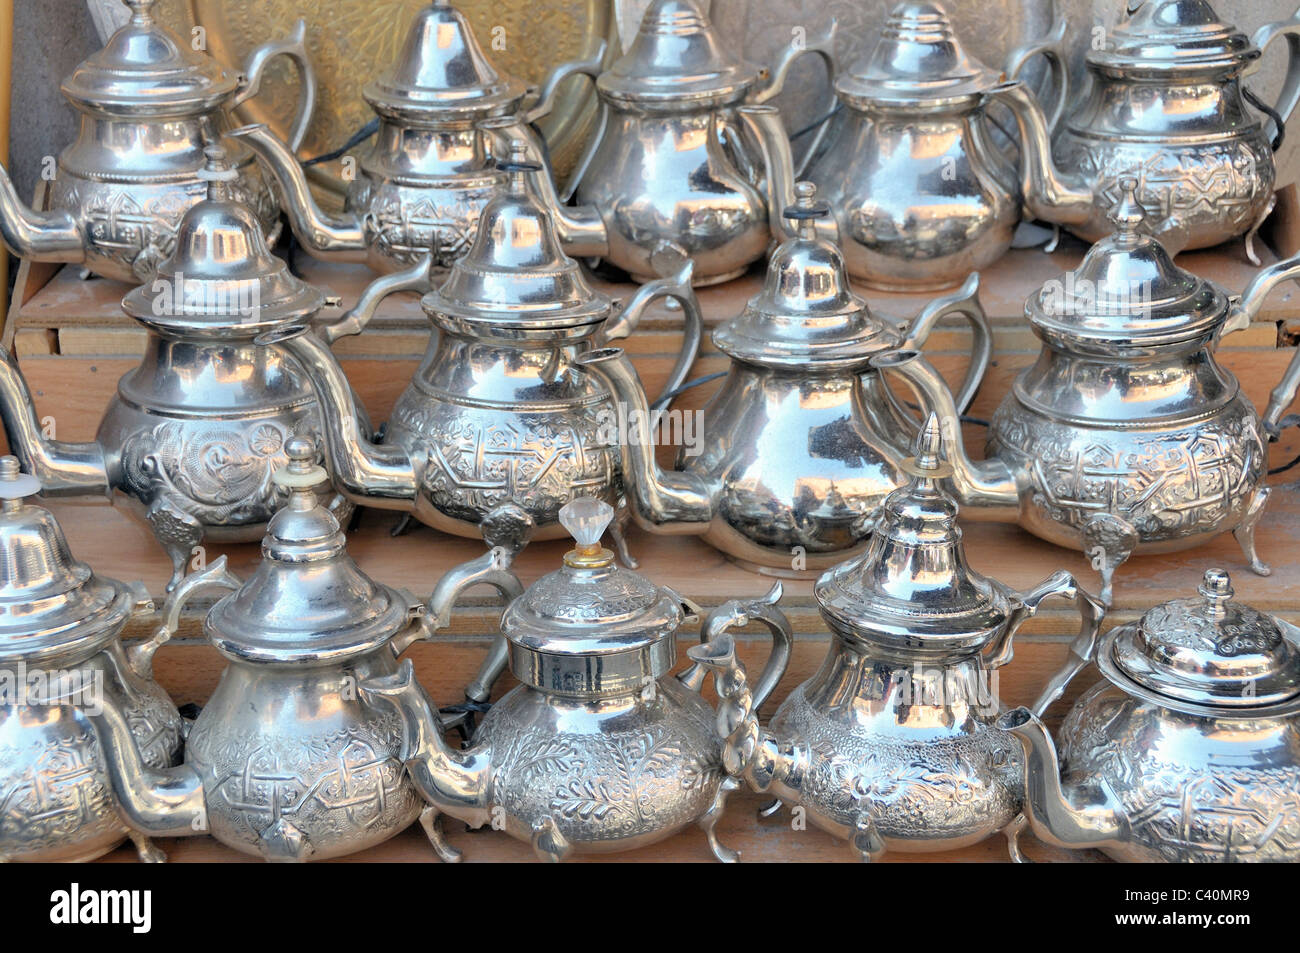 Dishes, Harness, market, Morocco, Marrakech, Medina, teapots, tea cookers, goods, wares, economy Stock Photo